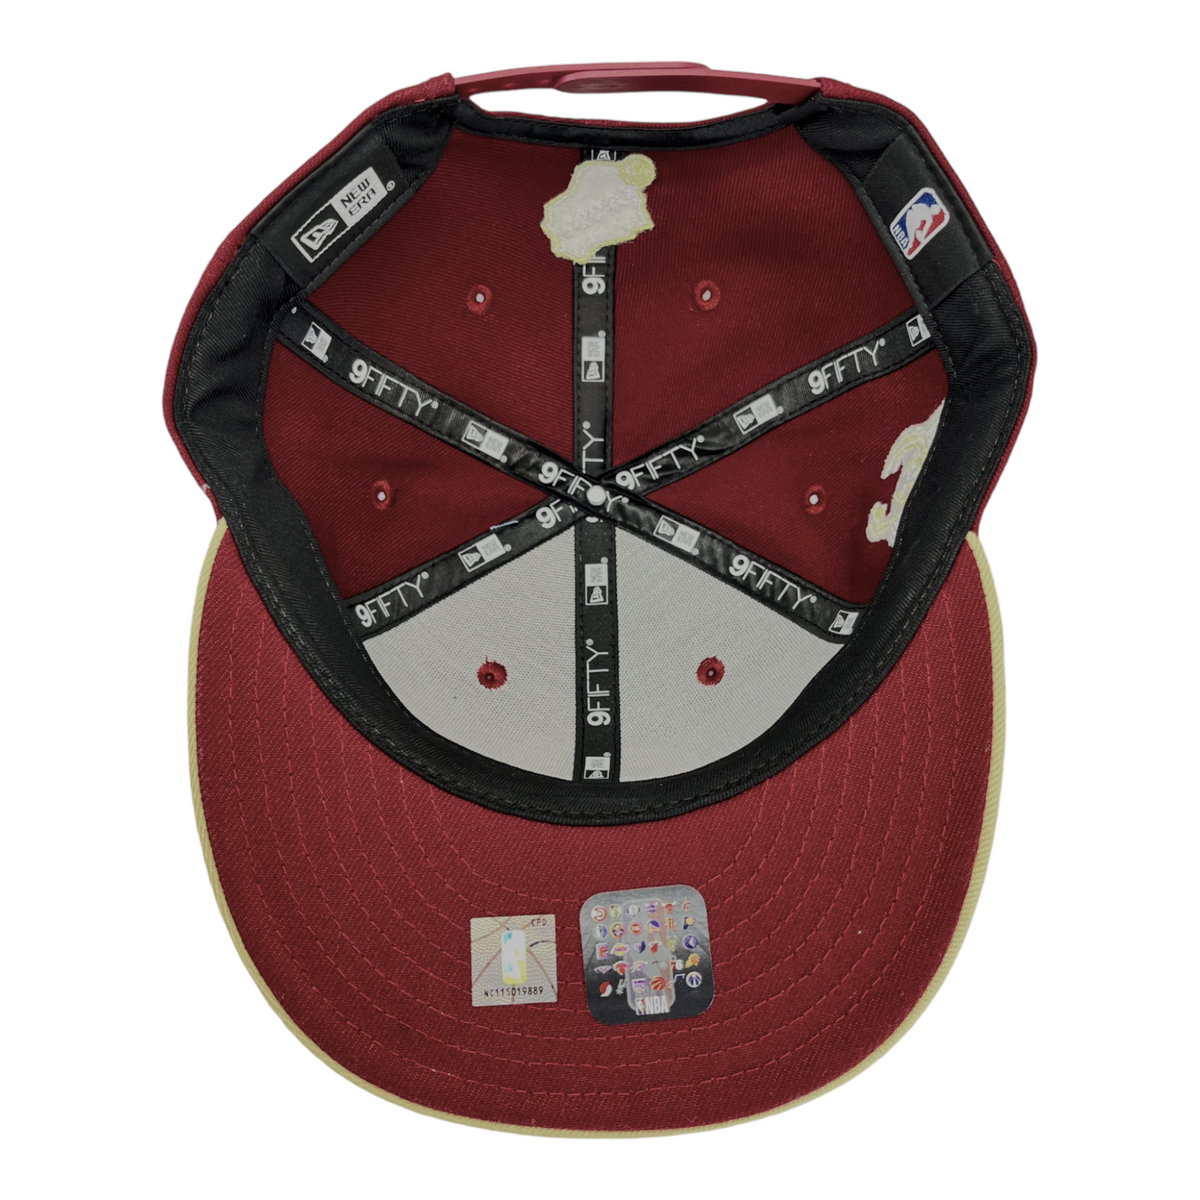 New Era Milwaukee Bucks Custom 9Fifty Snapback Baseball Cap - Burgundy/Tan